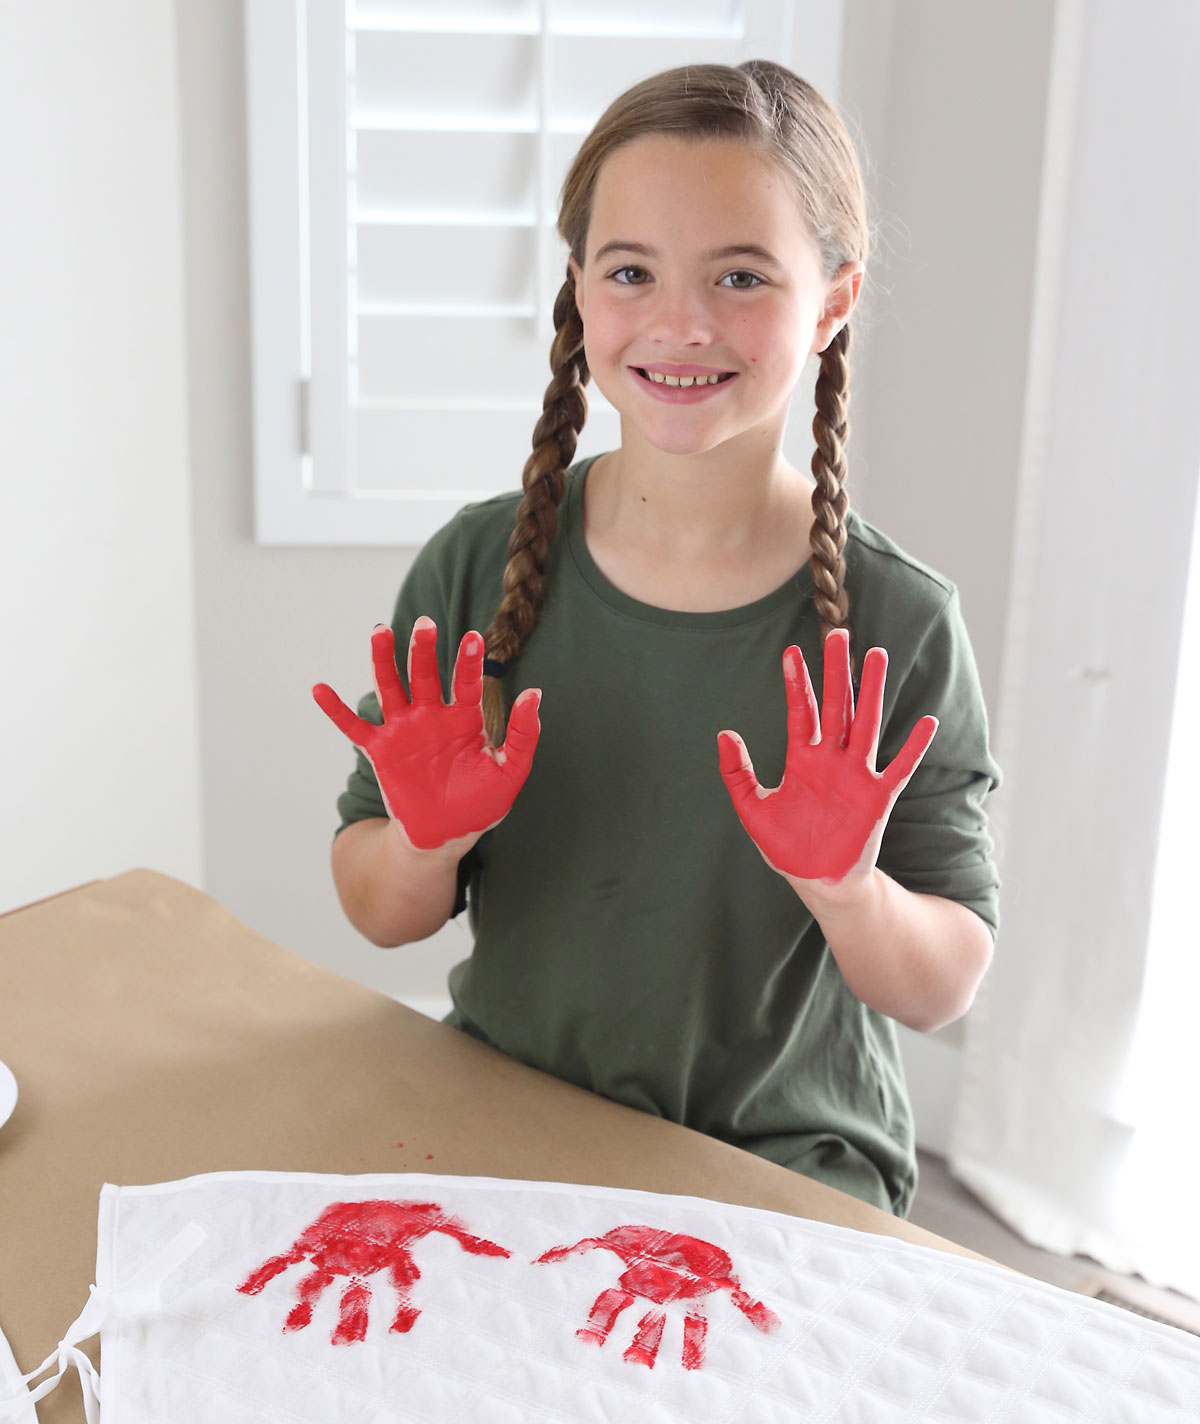 Girl making handprints on a Christmas tree skirt